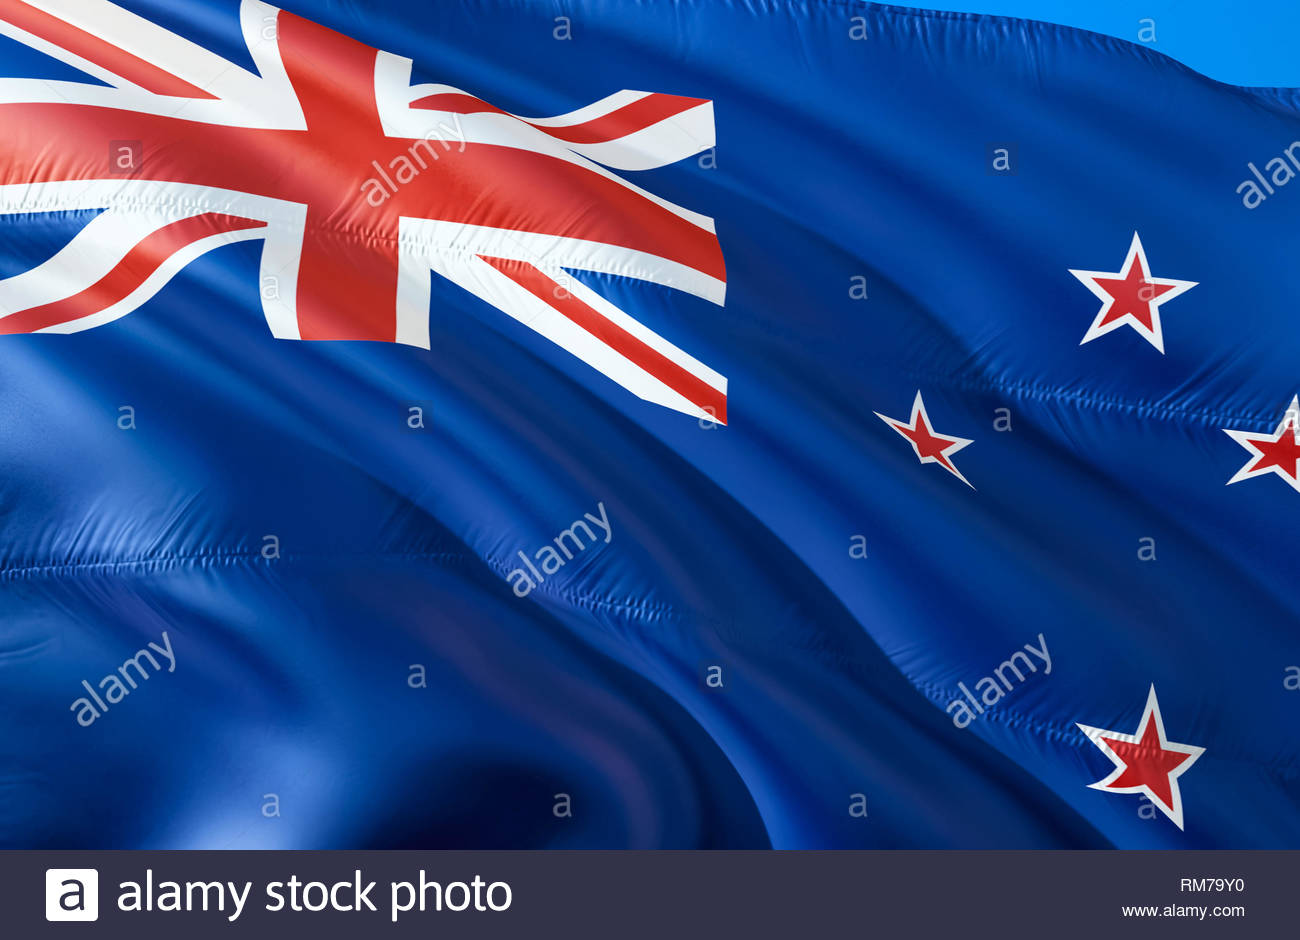 New Zealand flag 3D Waving flag design The national symbol of